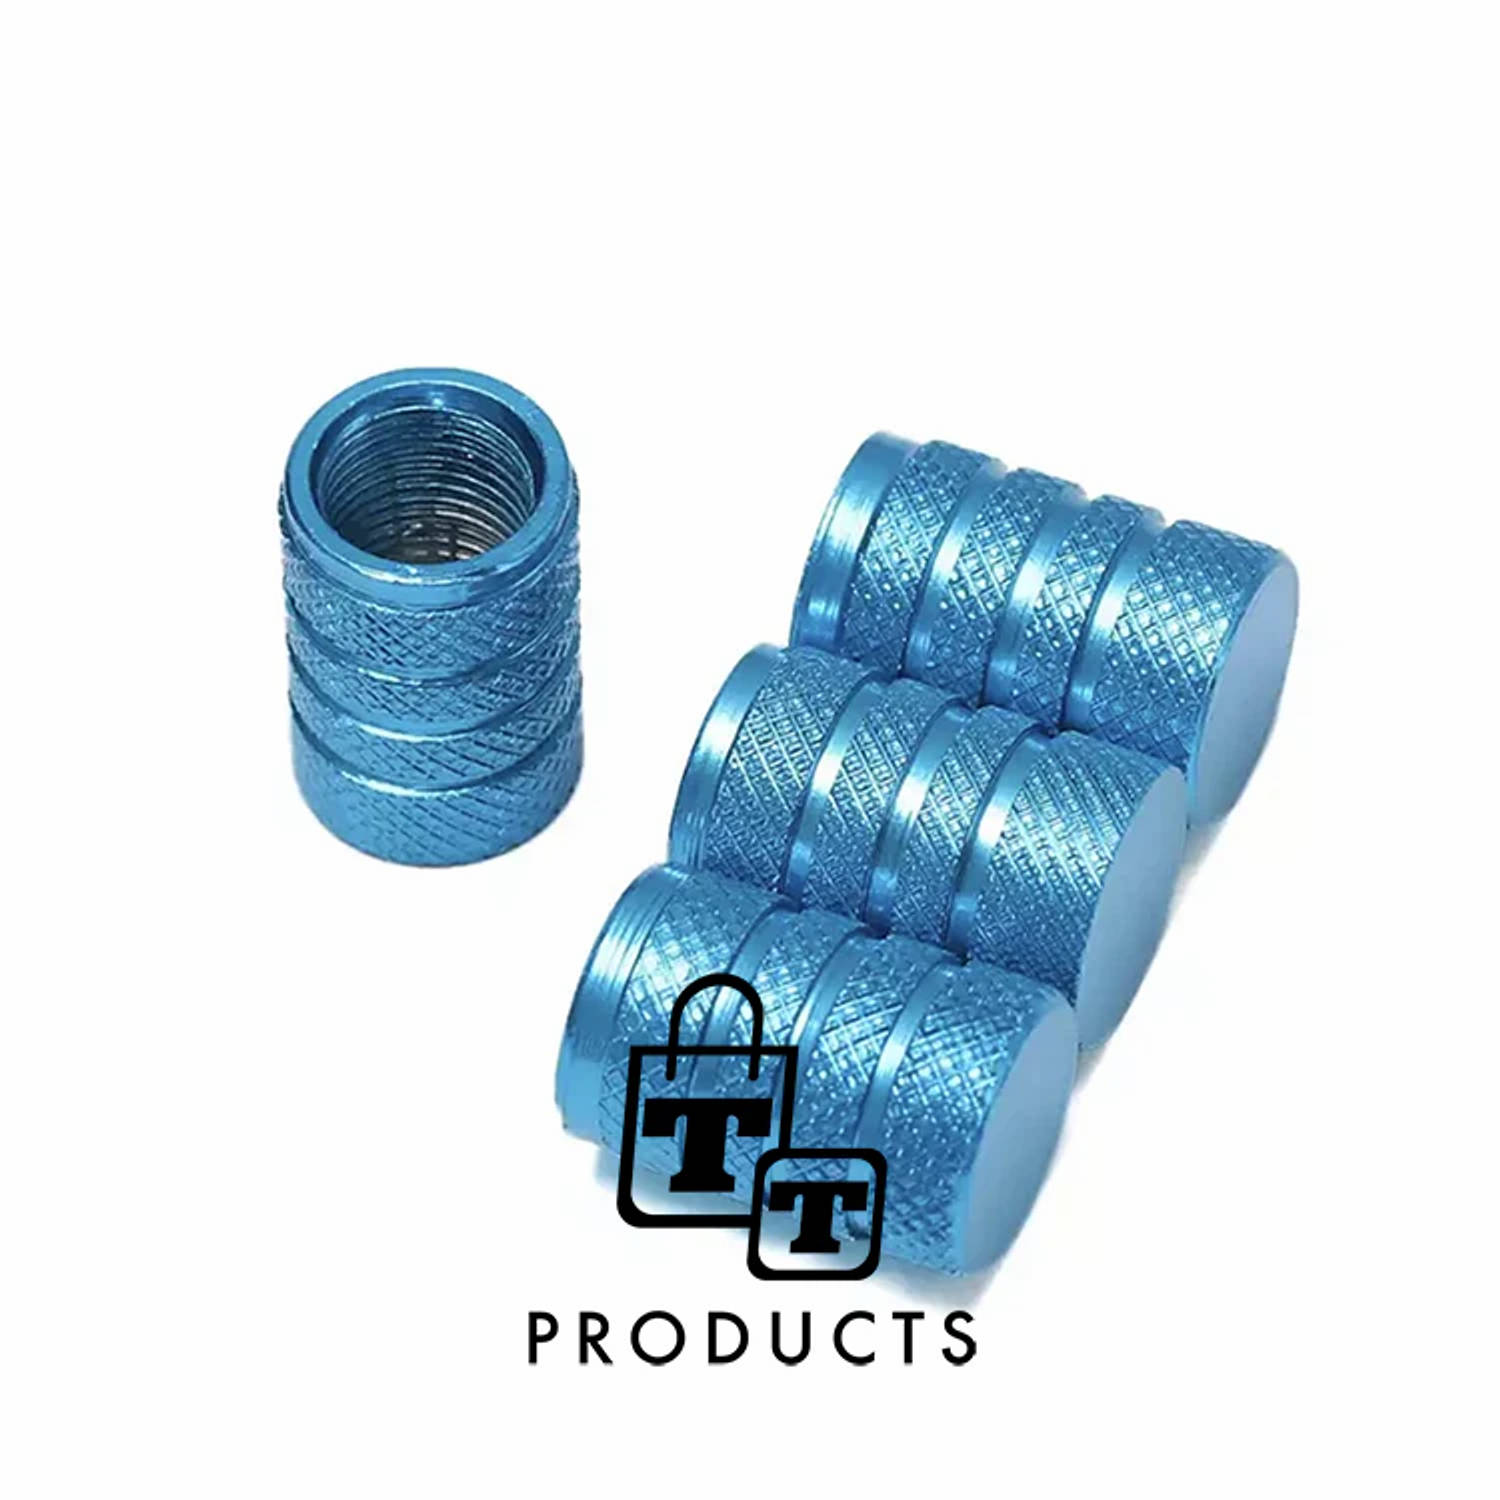 TT-products ventieldoppen 3-rings Light Blue aluminium 4 stuks lichtblauw auto ventieldop ventieldop